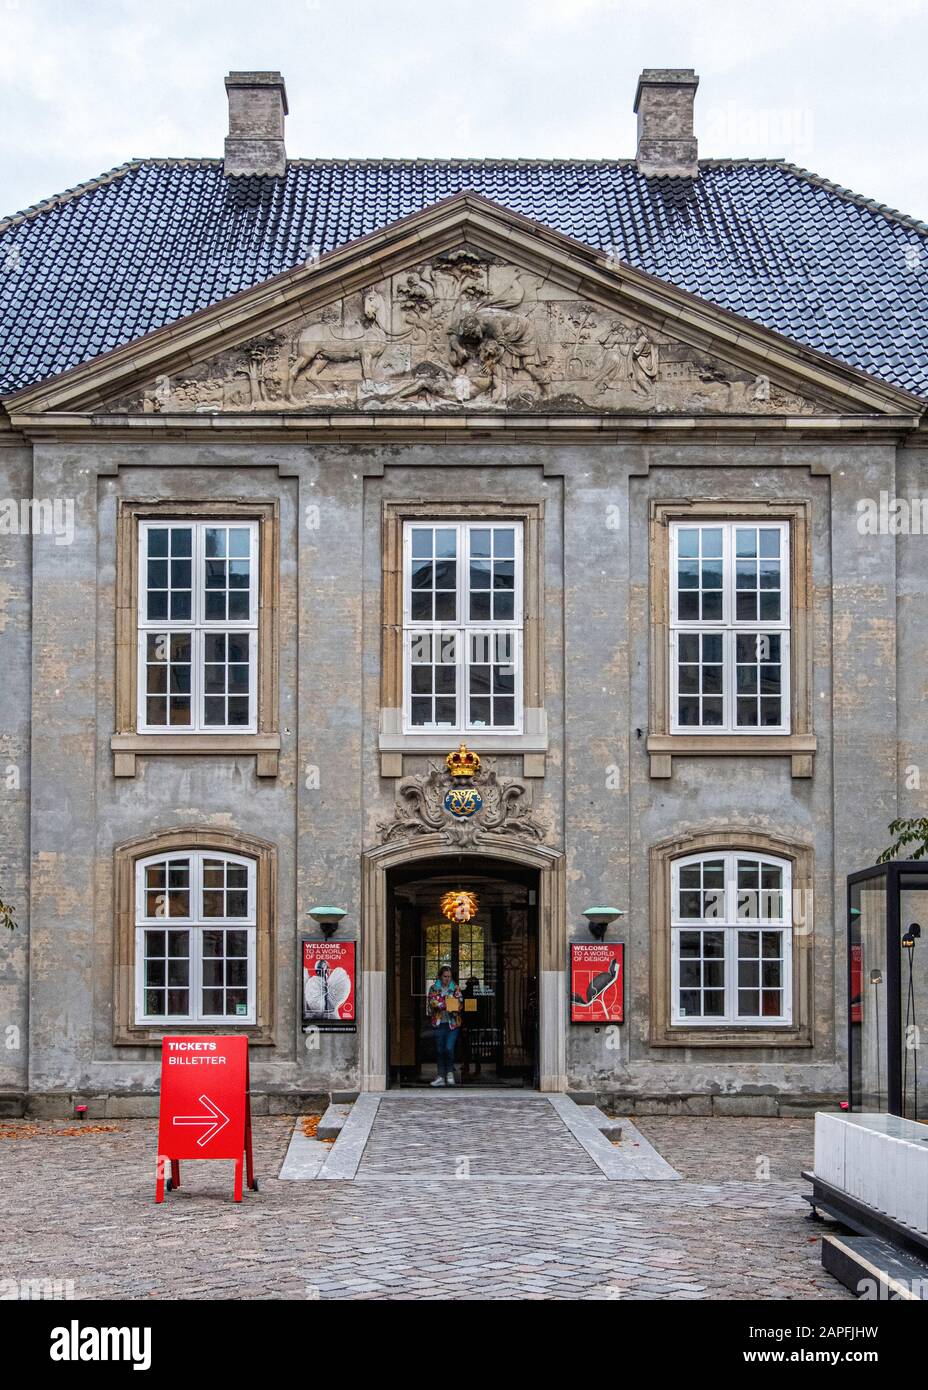 The Danish Museum of Art & Design displays Danish and international design and crafts in former hospital building, Copenhagen Denmark Stock Photo